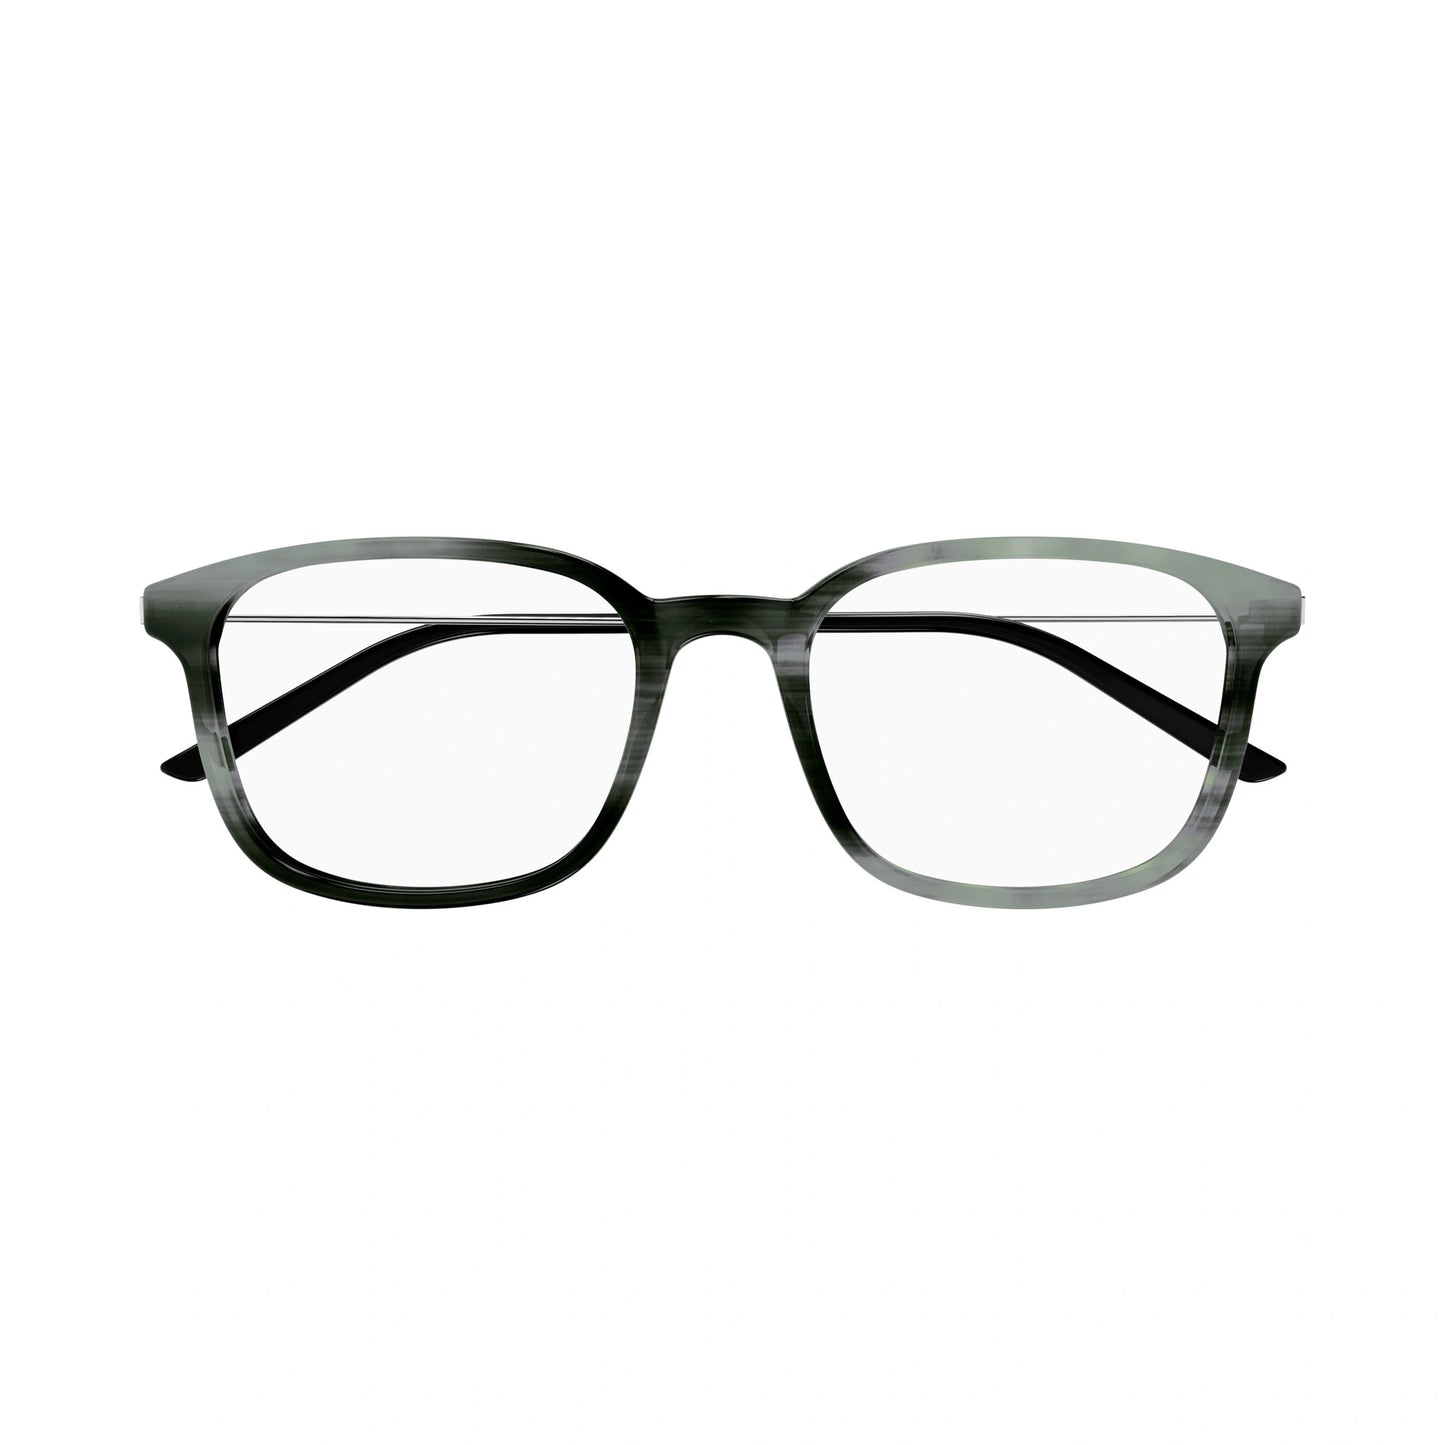 Gucci GG1577o-002 52mm New Eyeglasses